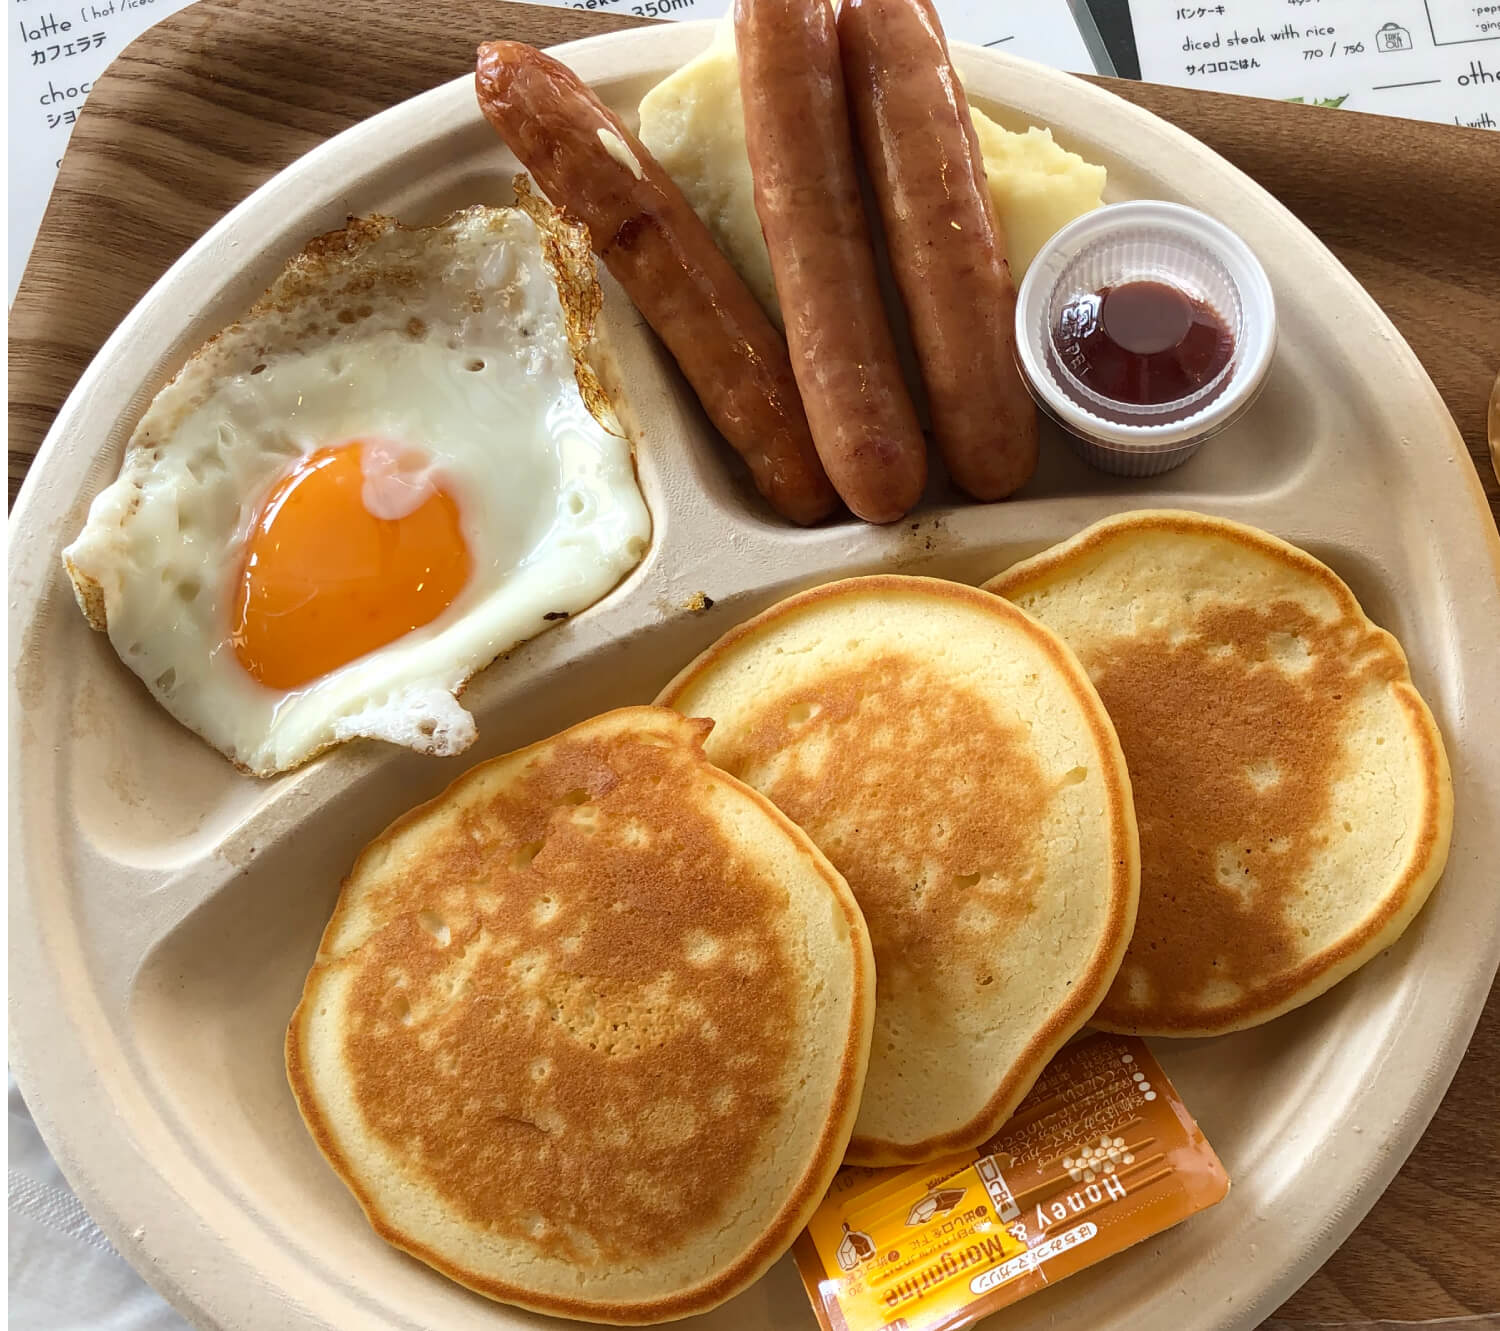 pancake breakfast